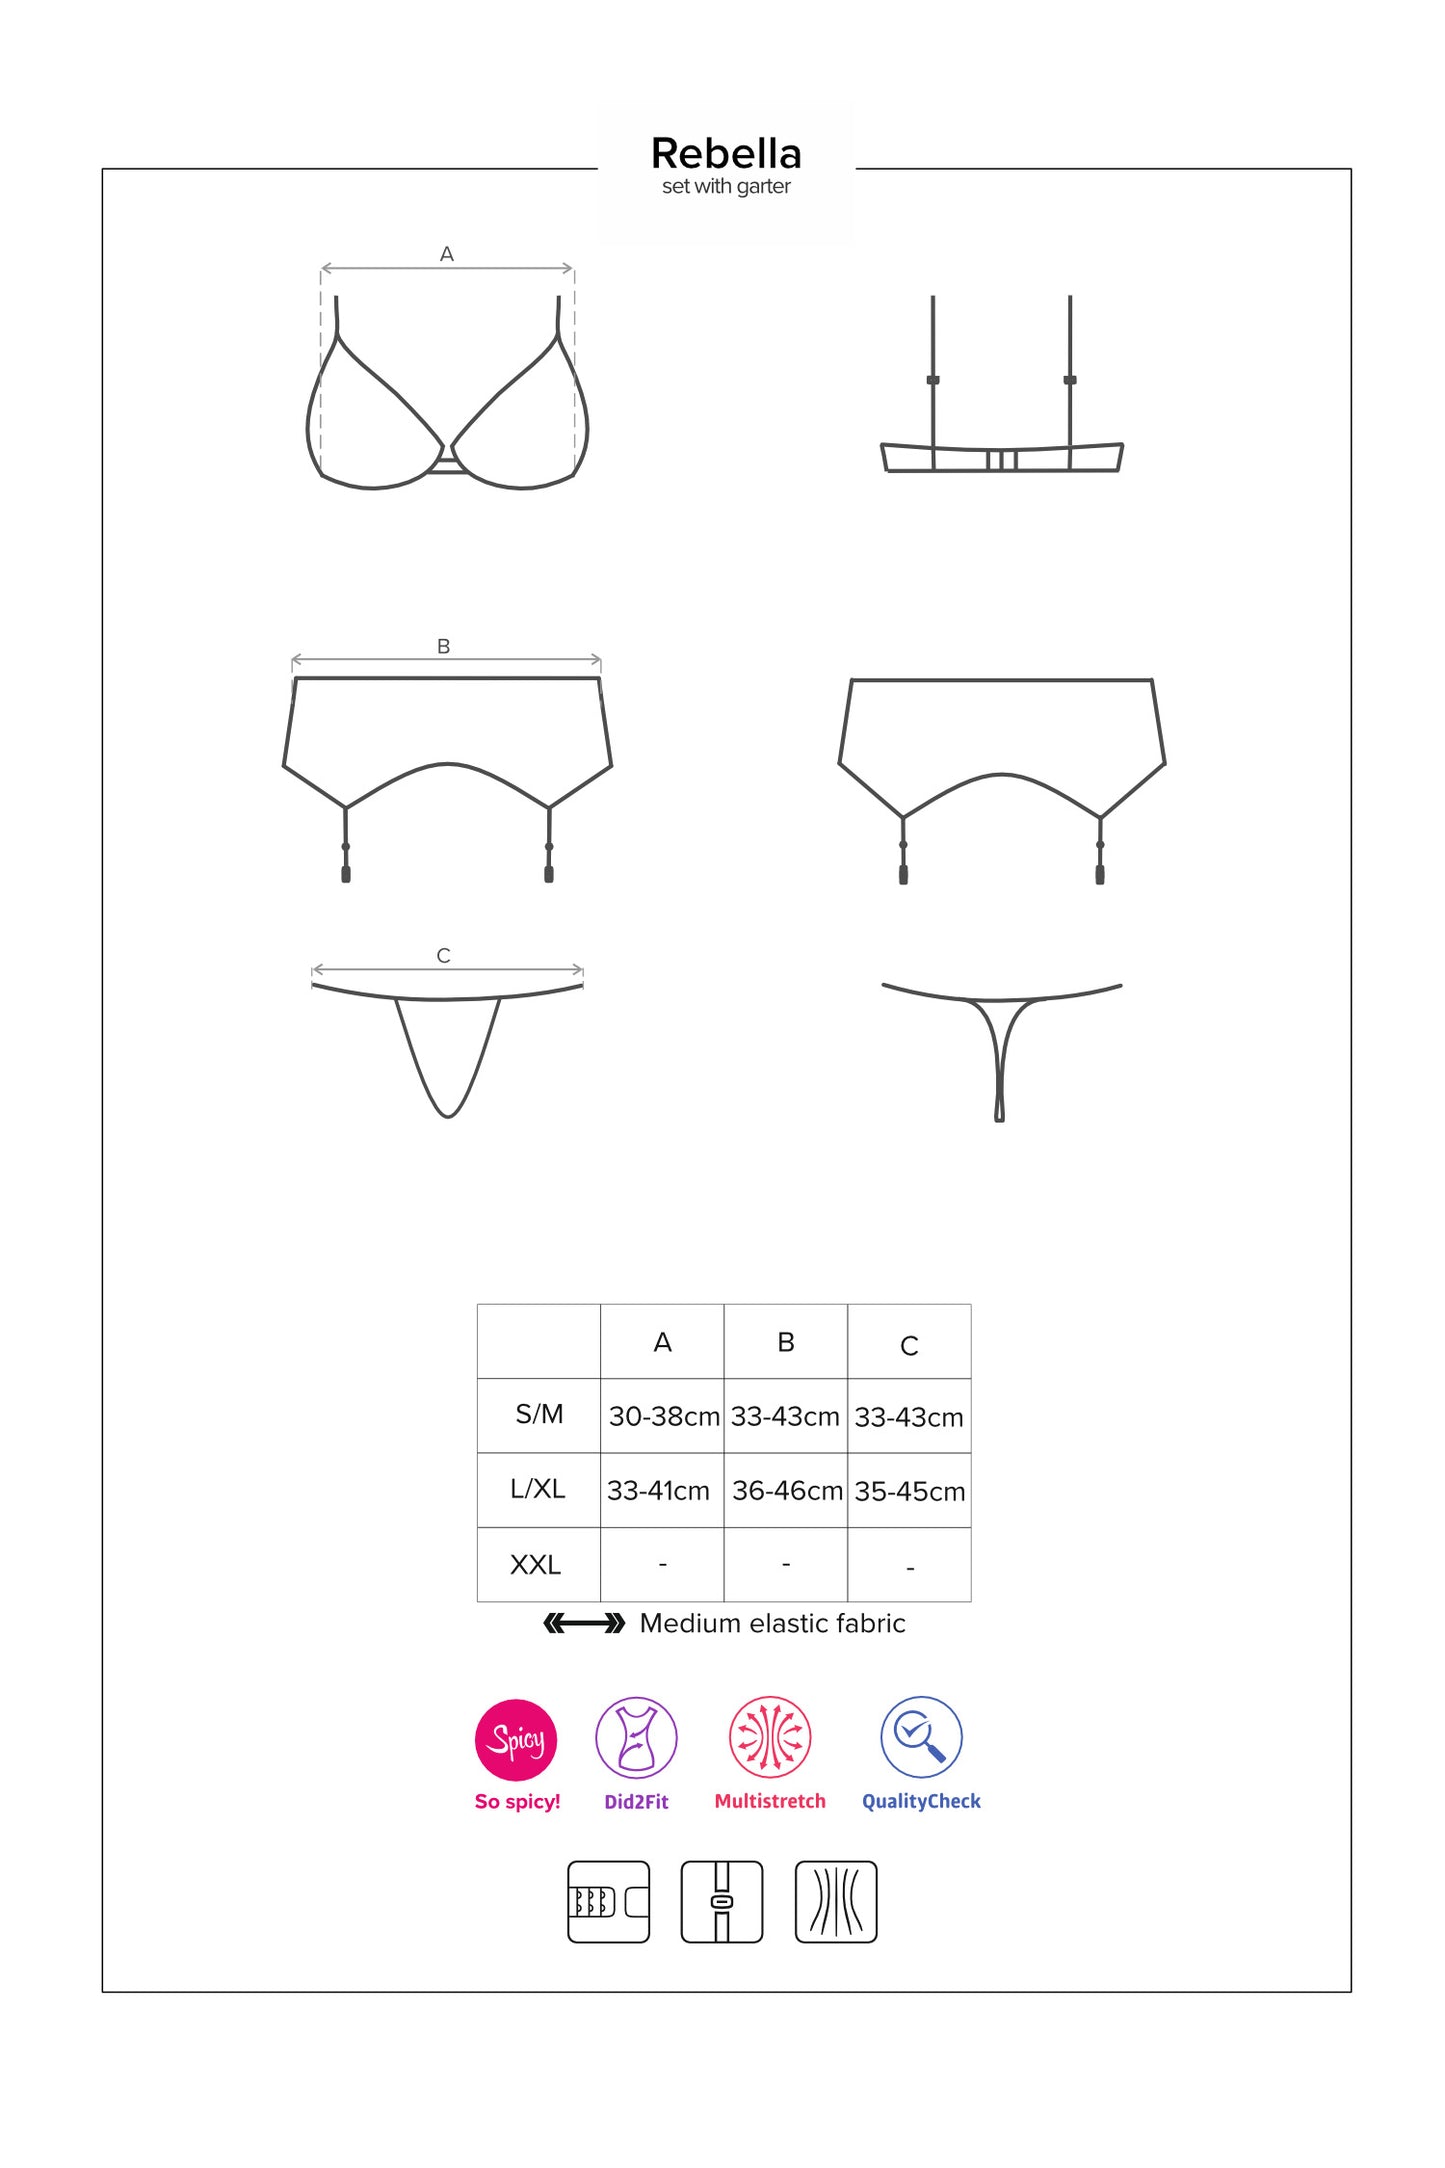 Redella Seductive lingerie set consisting of a bra, garter belt and thong